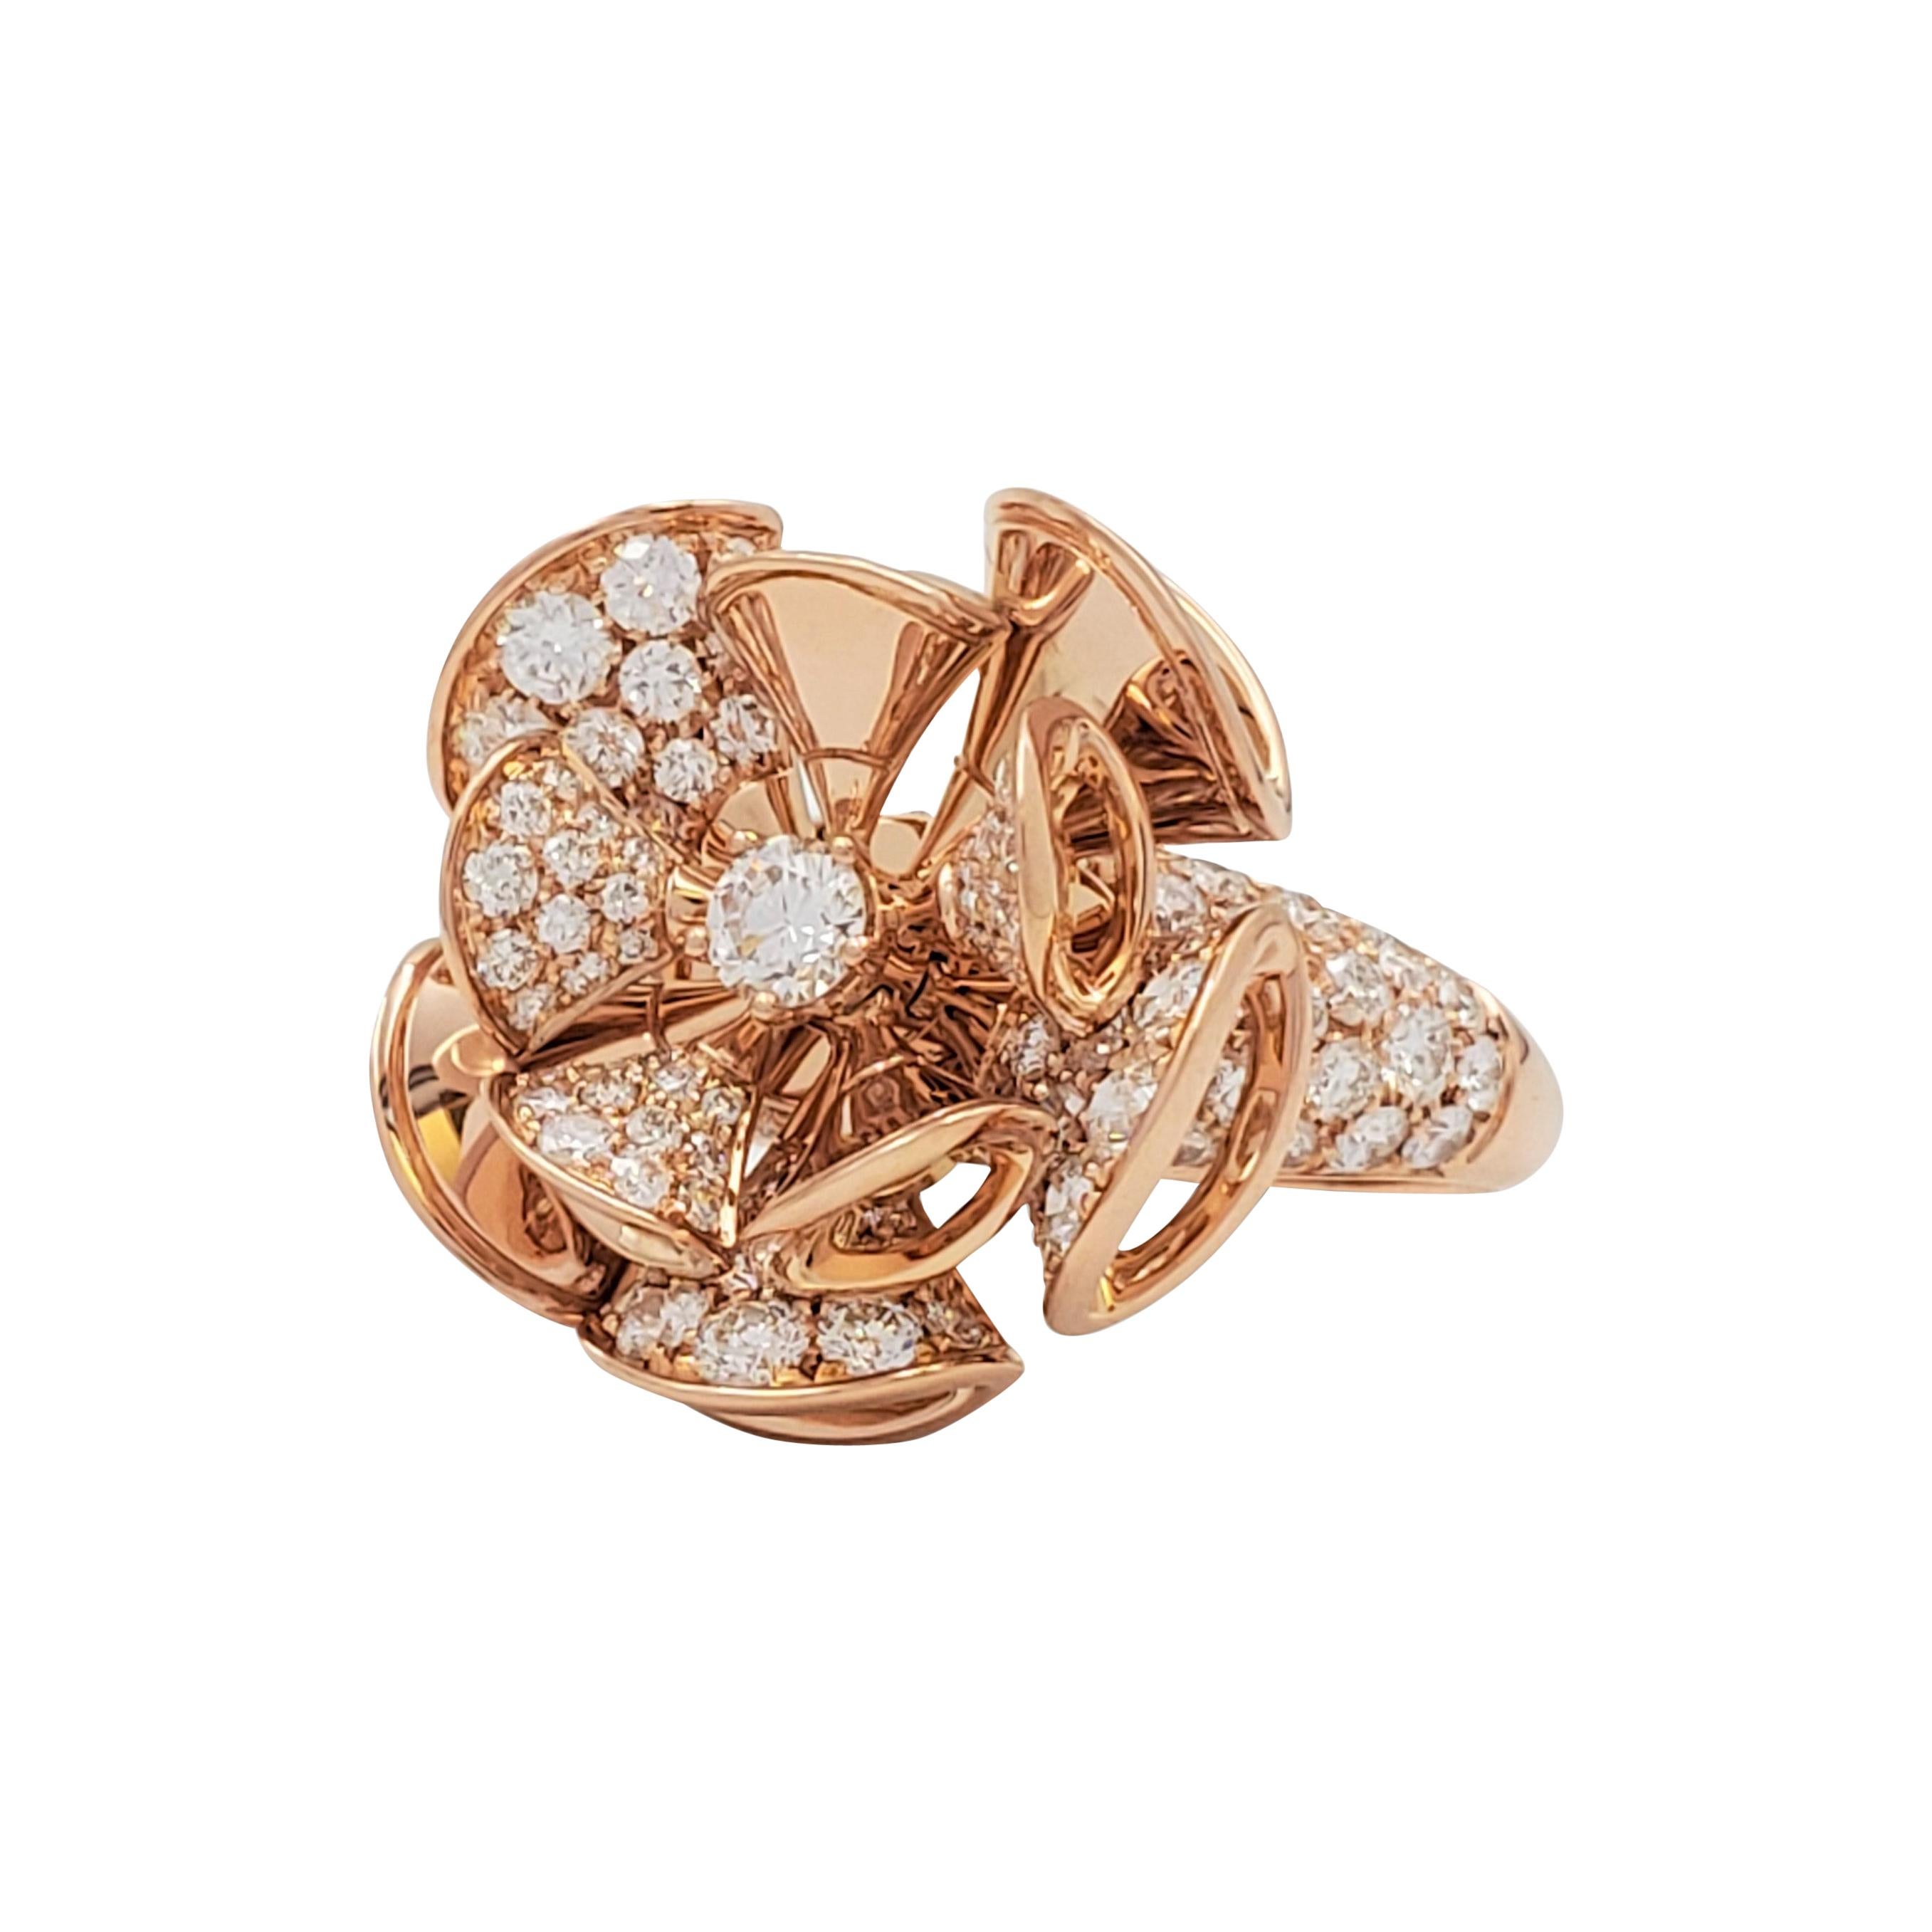 Bvlgari 'Divas' Dream' Rose Gold and Diamond Cocktail Ring